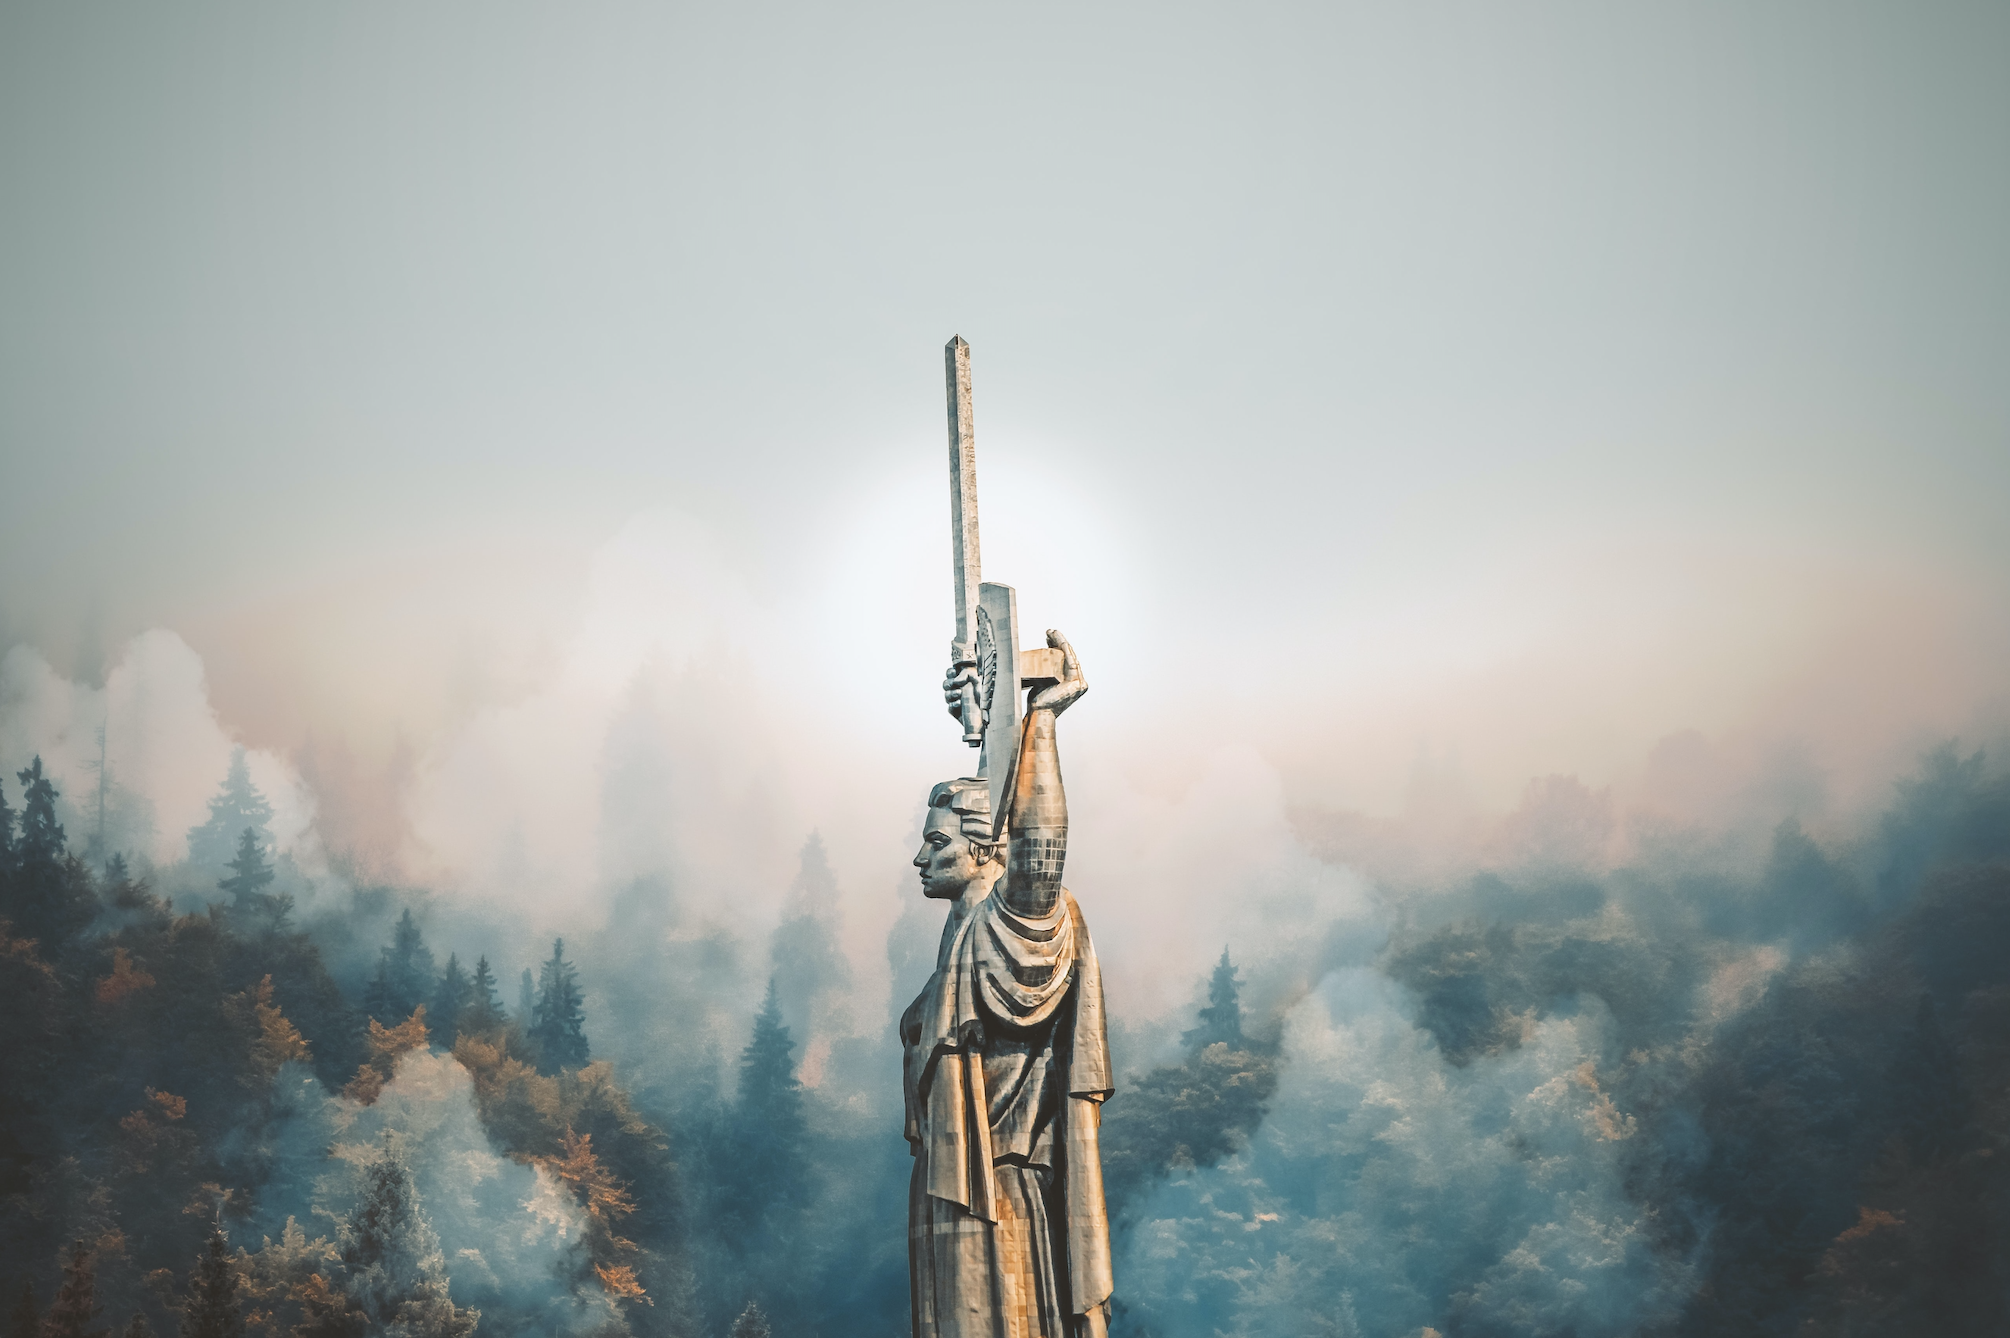 The Motherland Monument in Kyiv. Image by Rostislav Artov